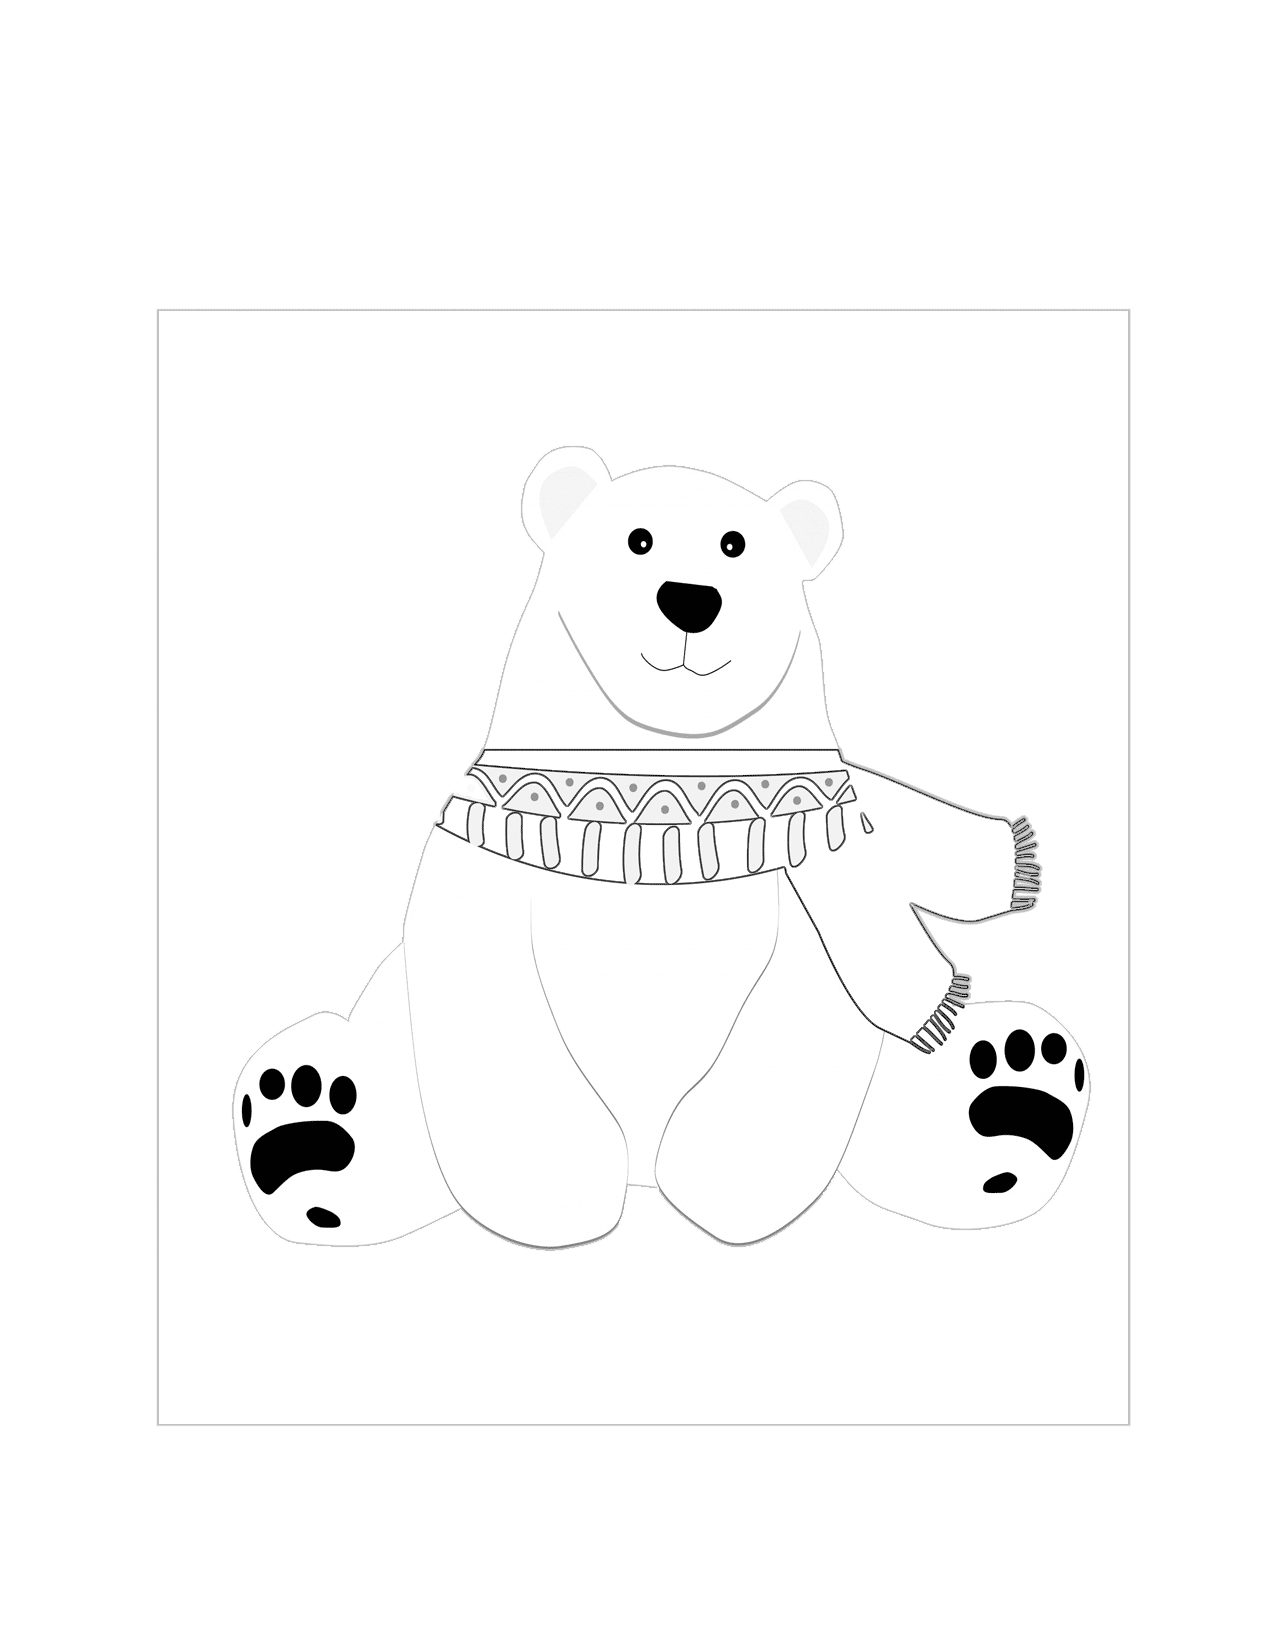 Polar Bear Coloring Page